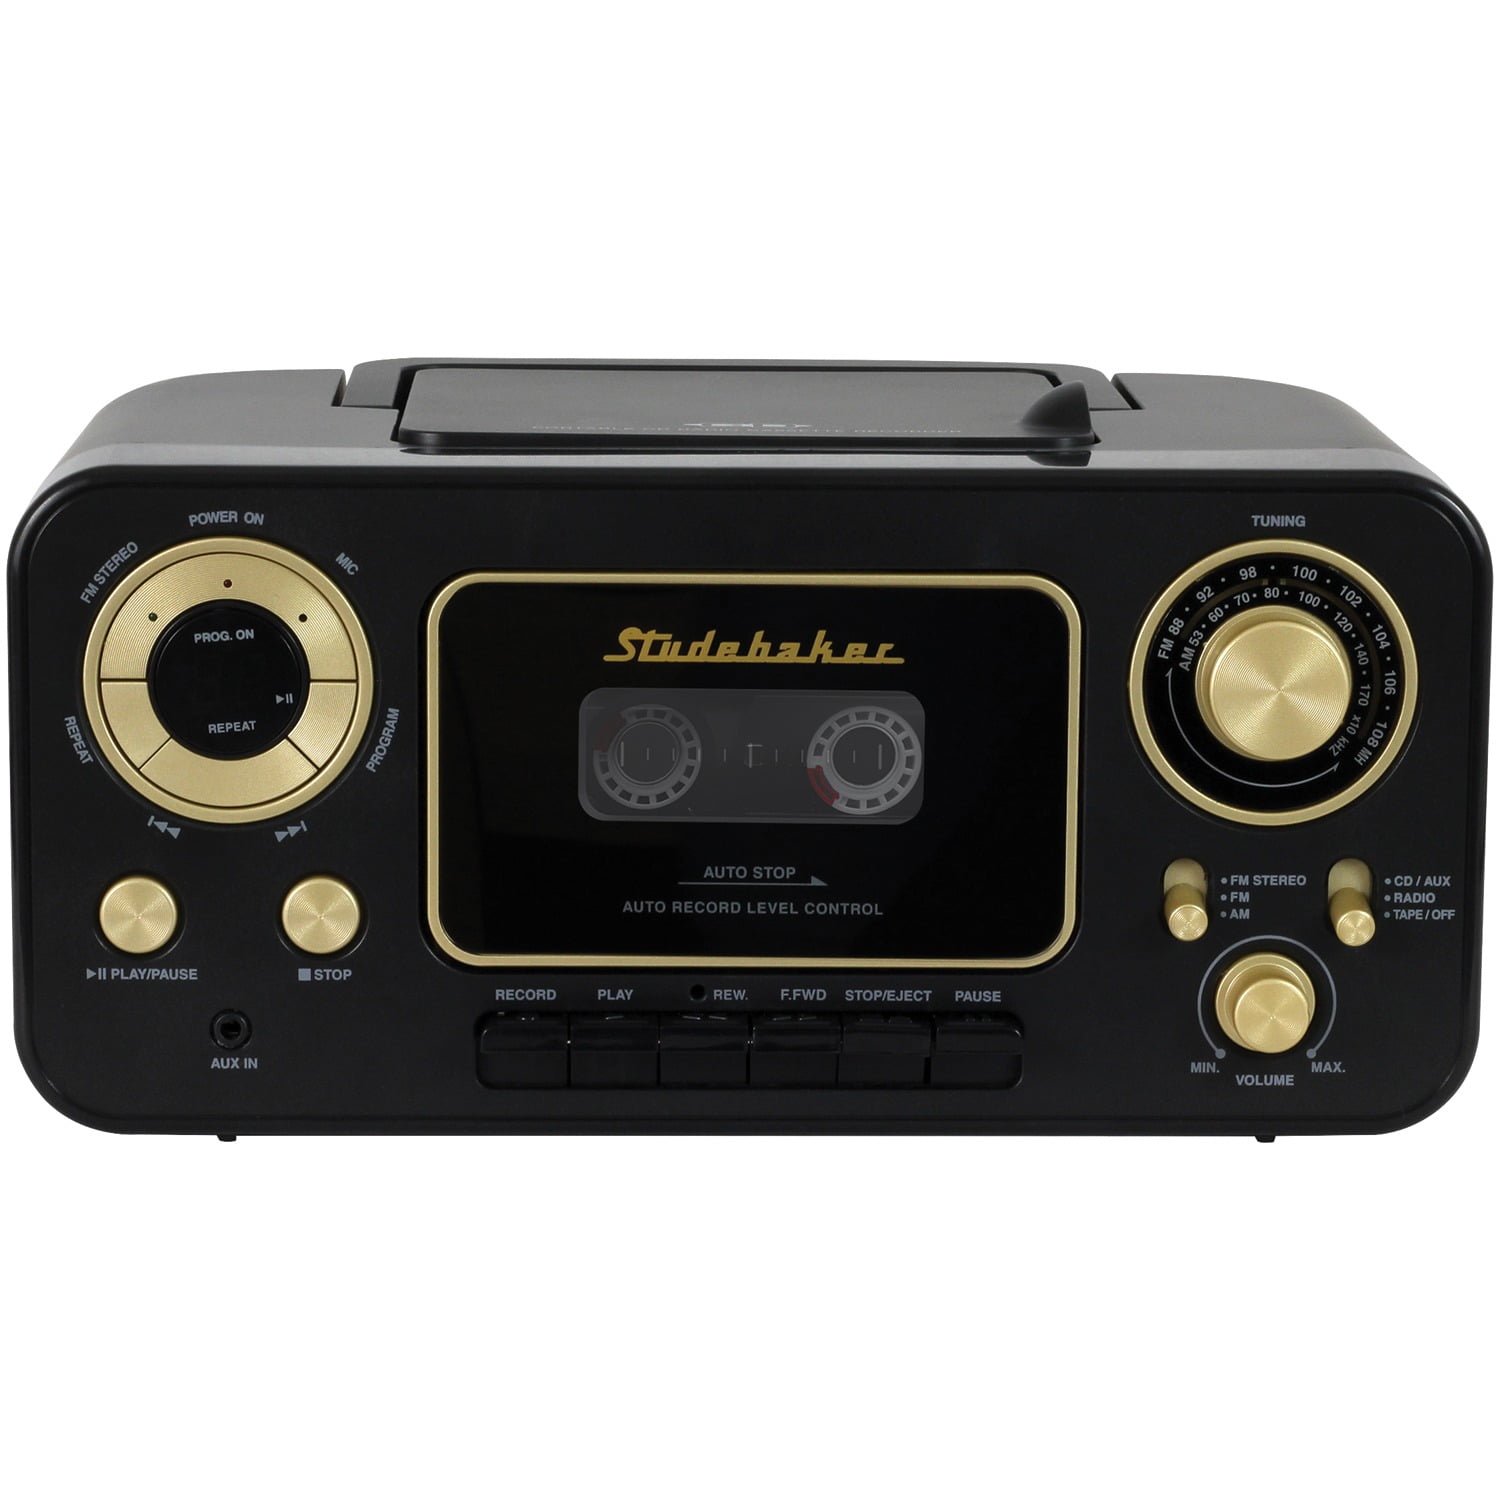 Studebaker SB2135BG Portable Stereo CD Player with AM/FM Radio & Cassette  Player/Recorder (Black & Gold)